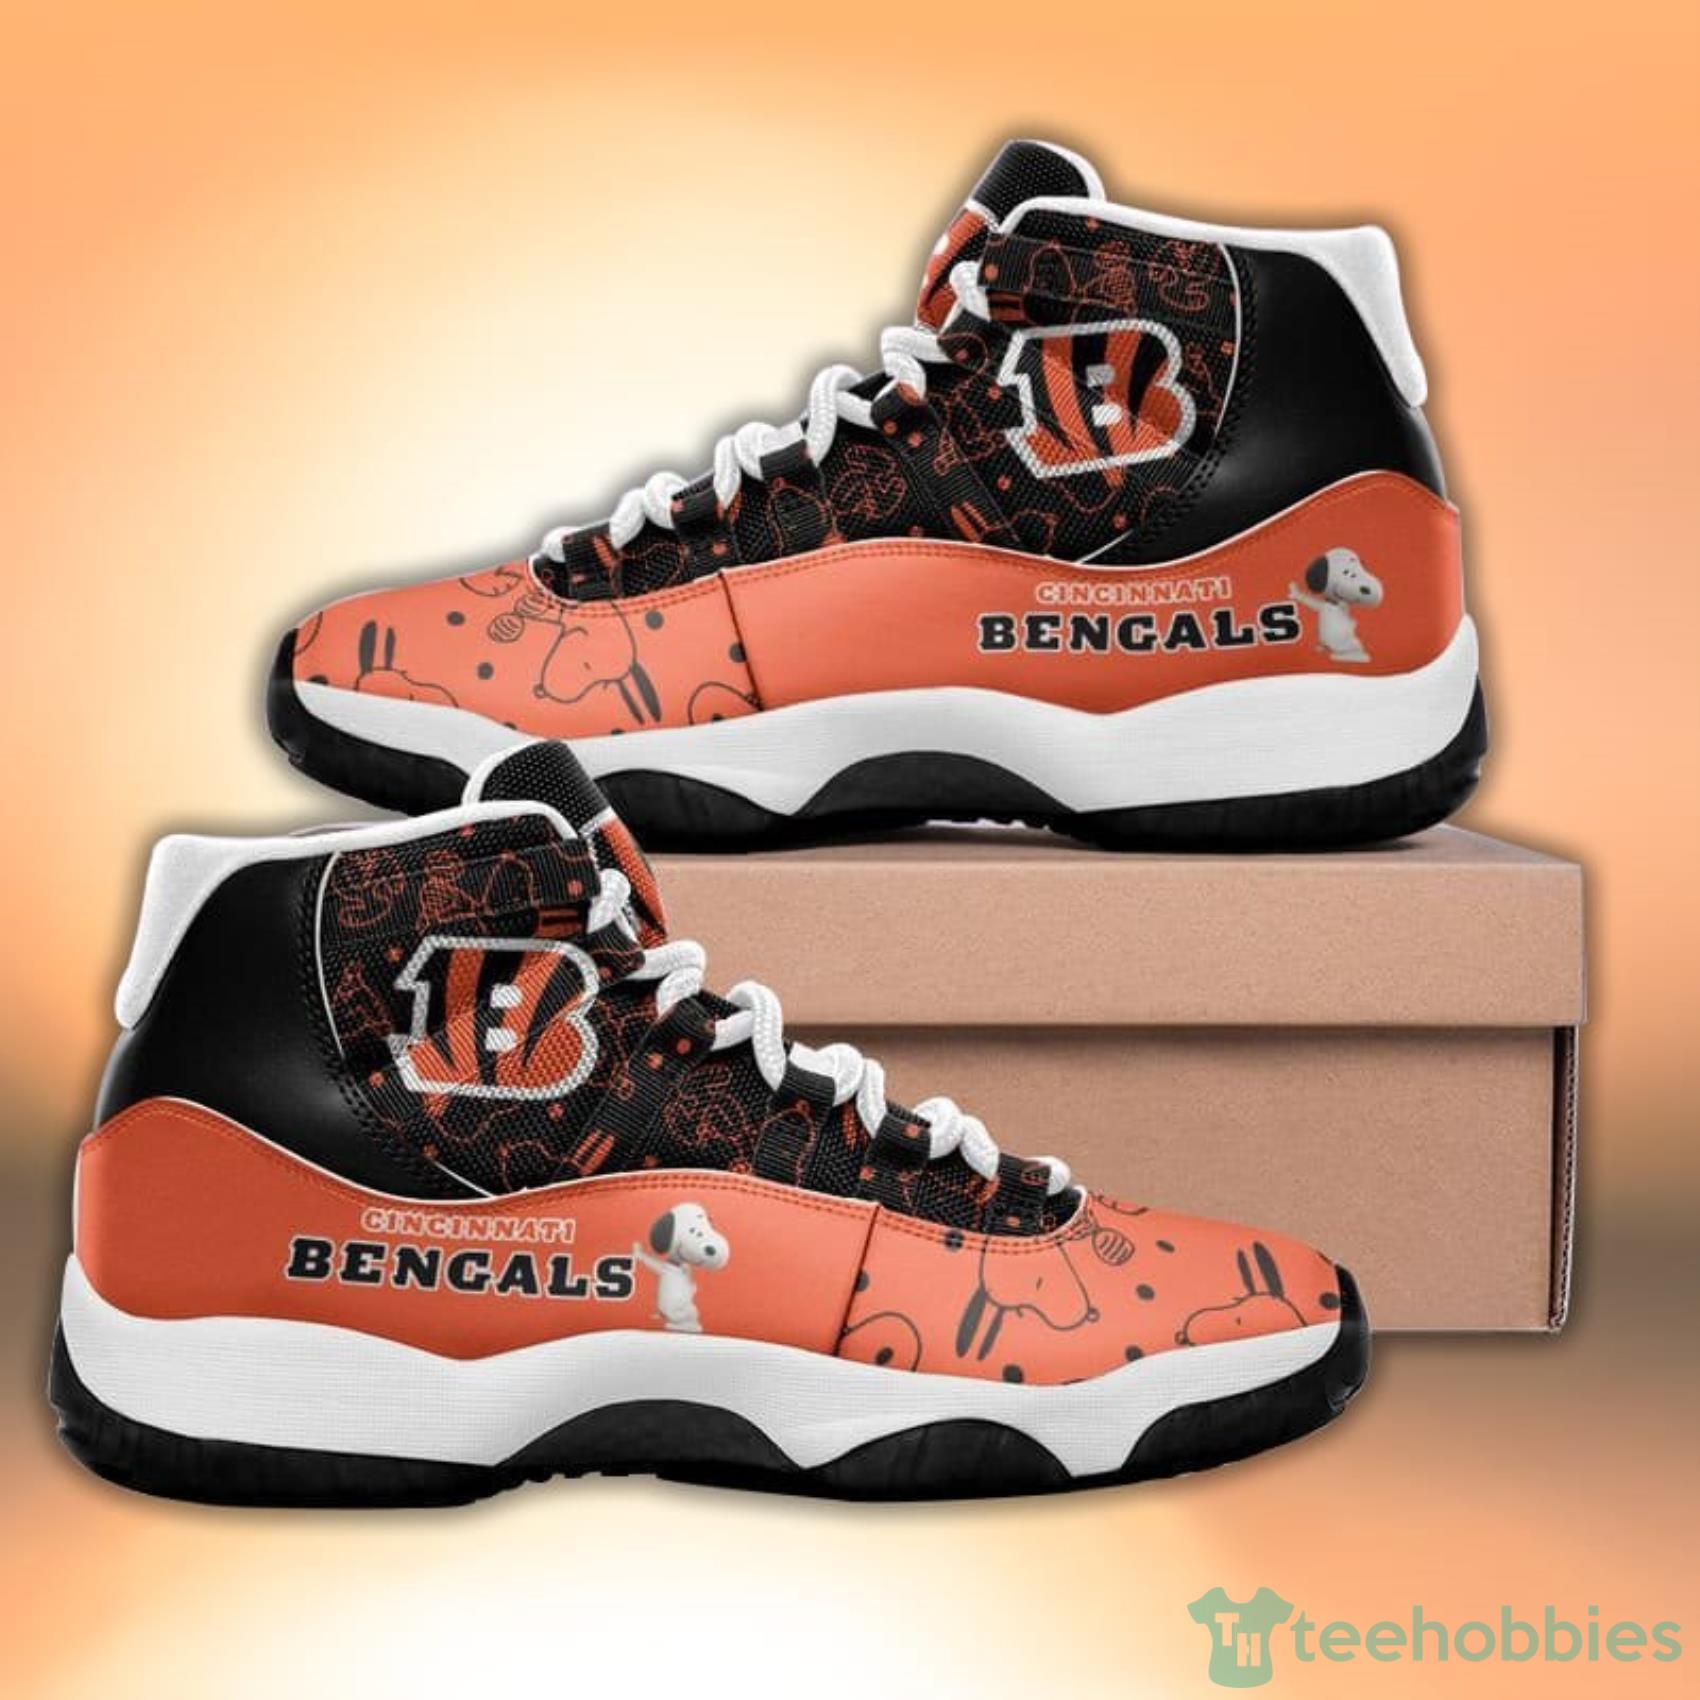 Cincinnati Bengals Snoopy Pattern Style Sneaker Air Jordan 11 Shoes Product Photo 1